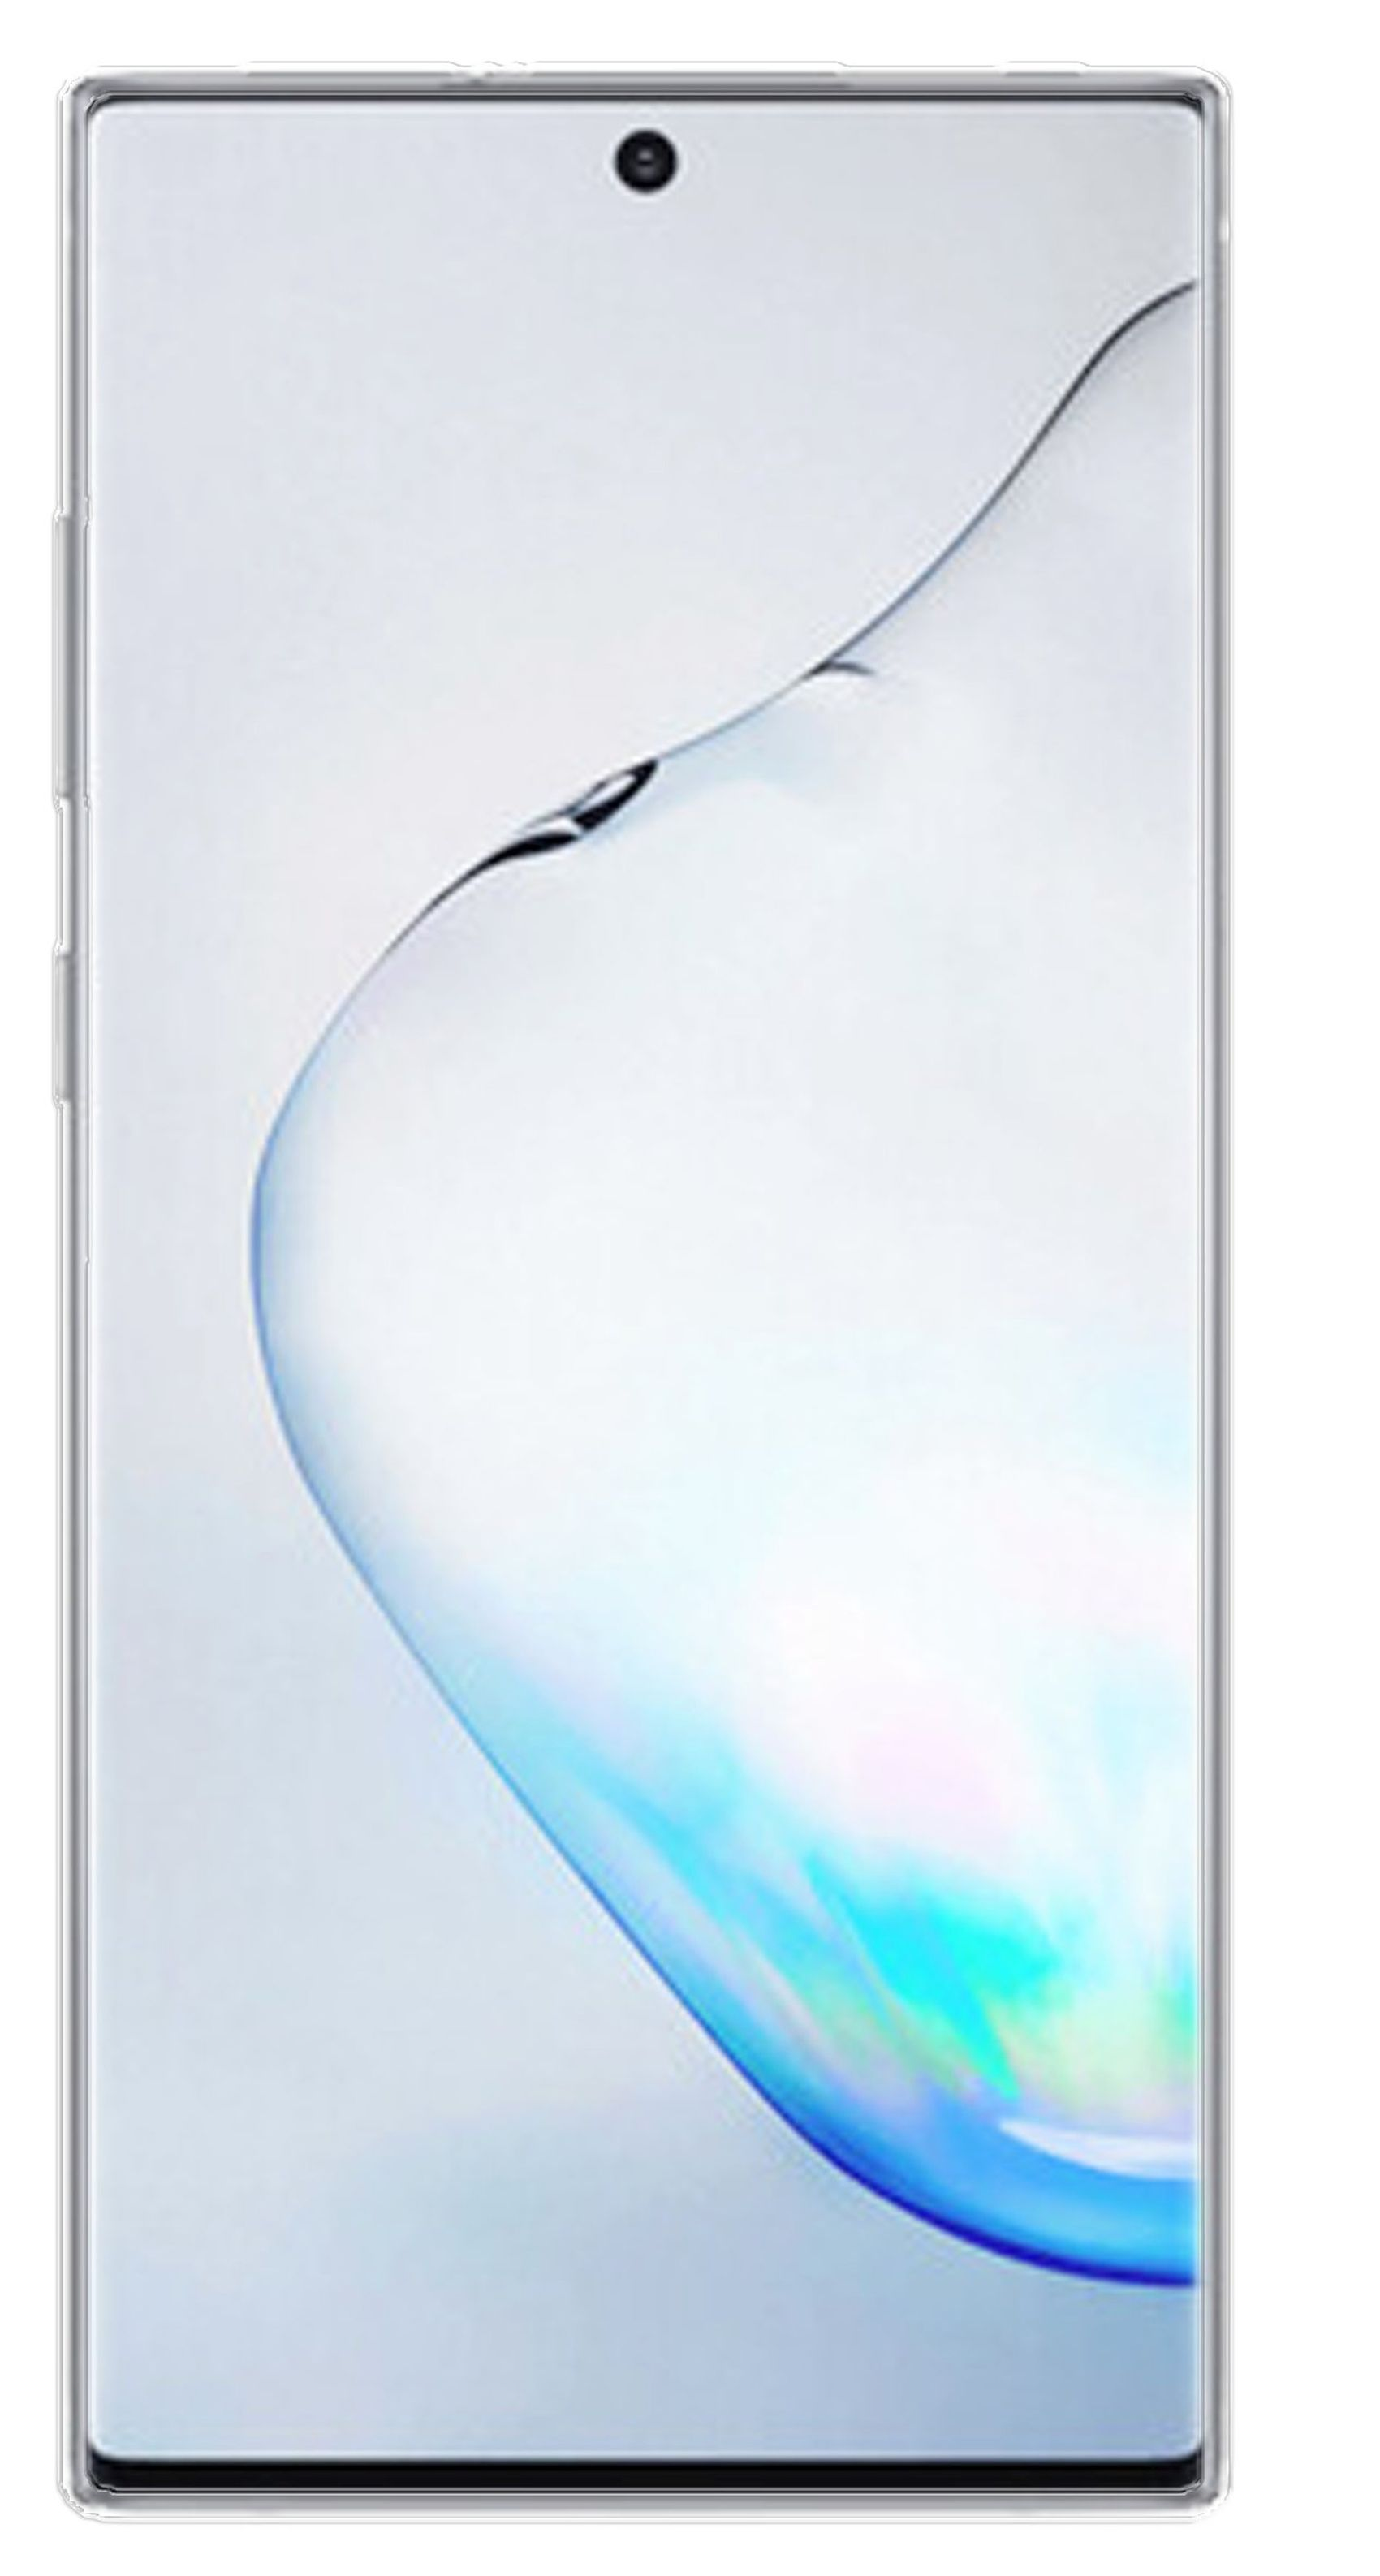 COFI Basic Case, Bumper, Samsung, Galaxy 10 Transparent Note Plus